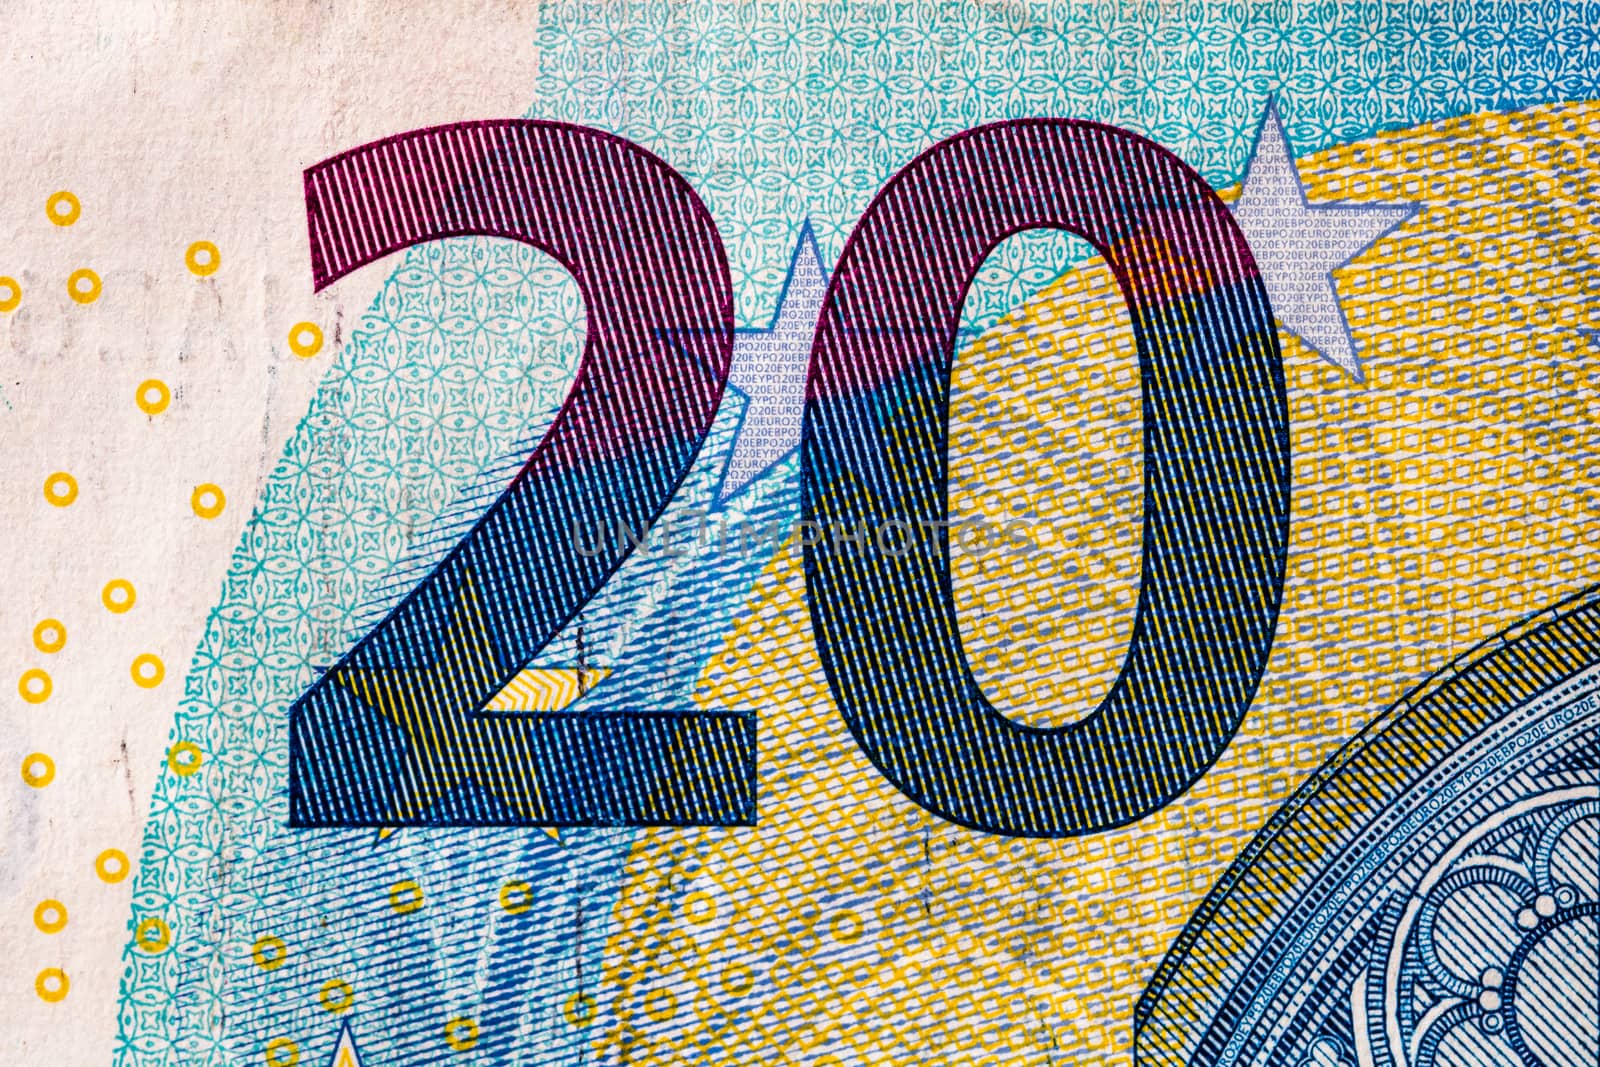 Selective focus on detail of euro banknotes. Close up macro deta by vladispas